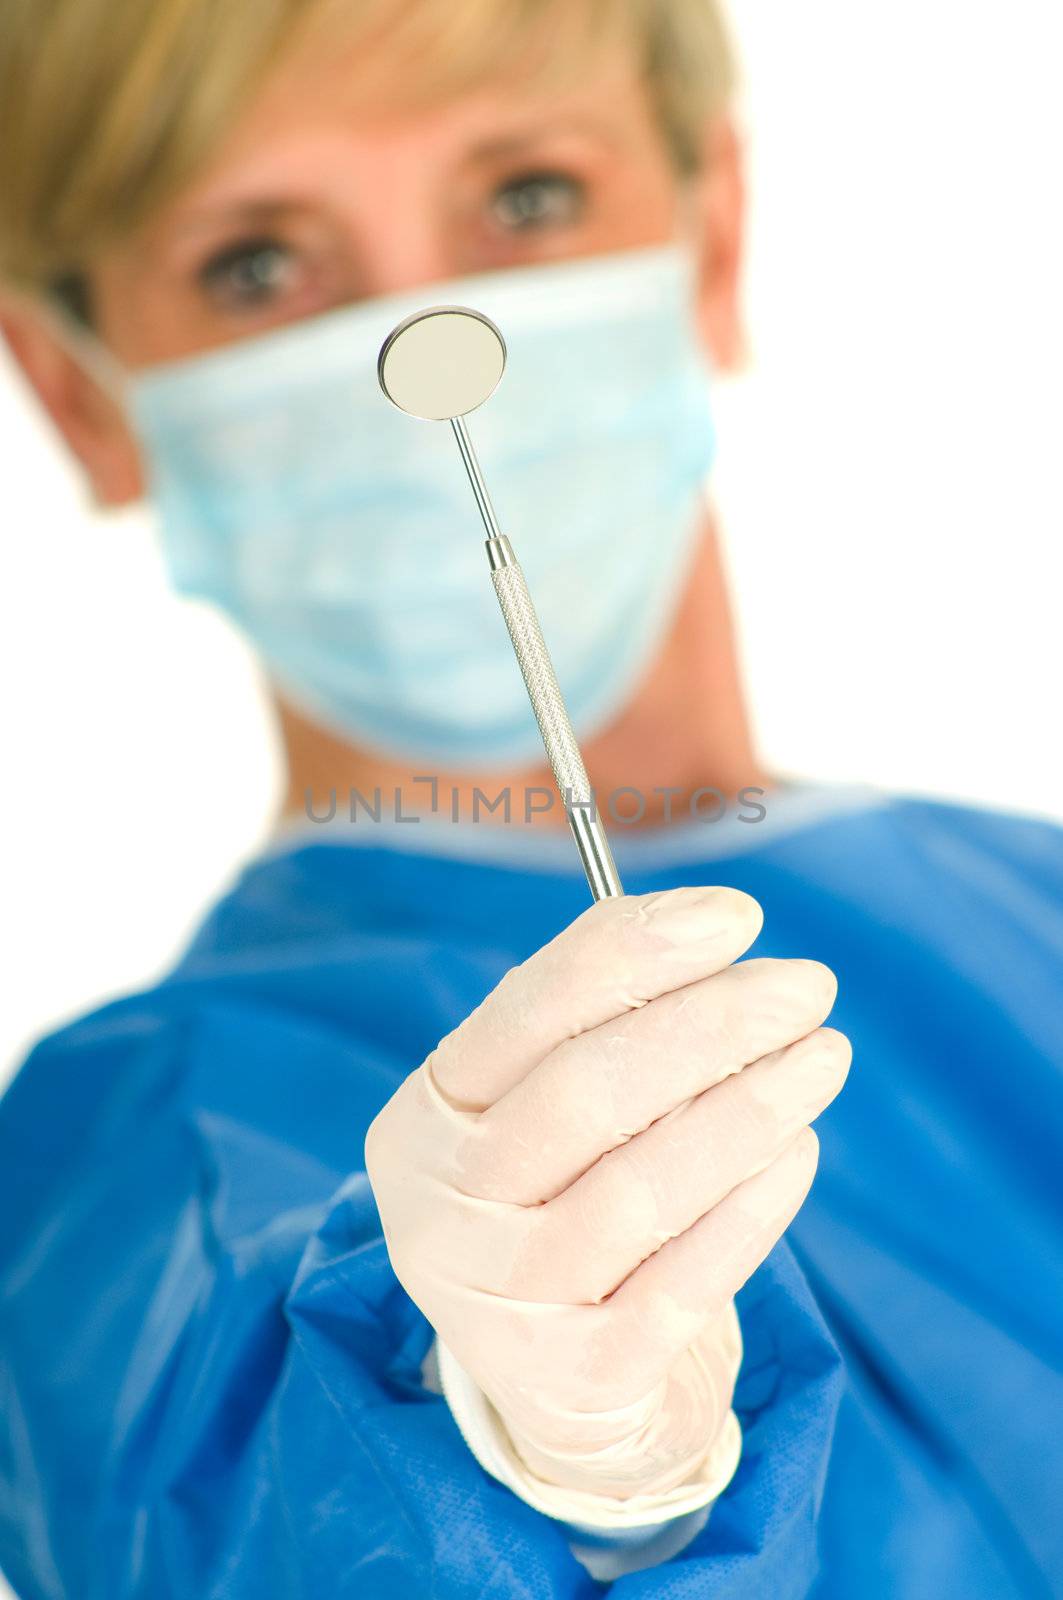 dentist holding dental mirror by ambro